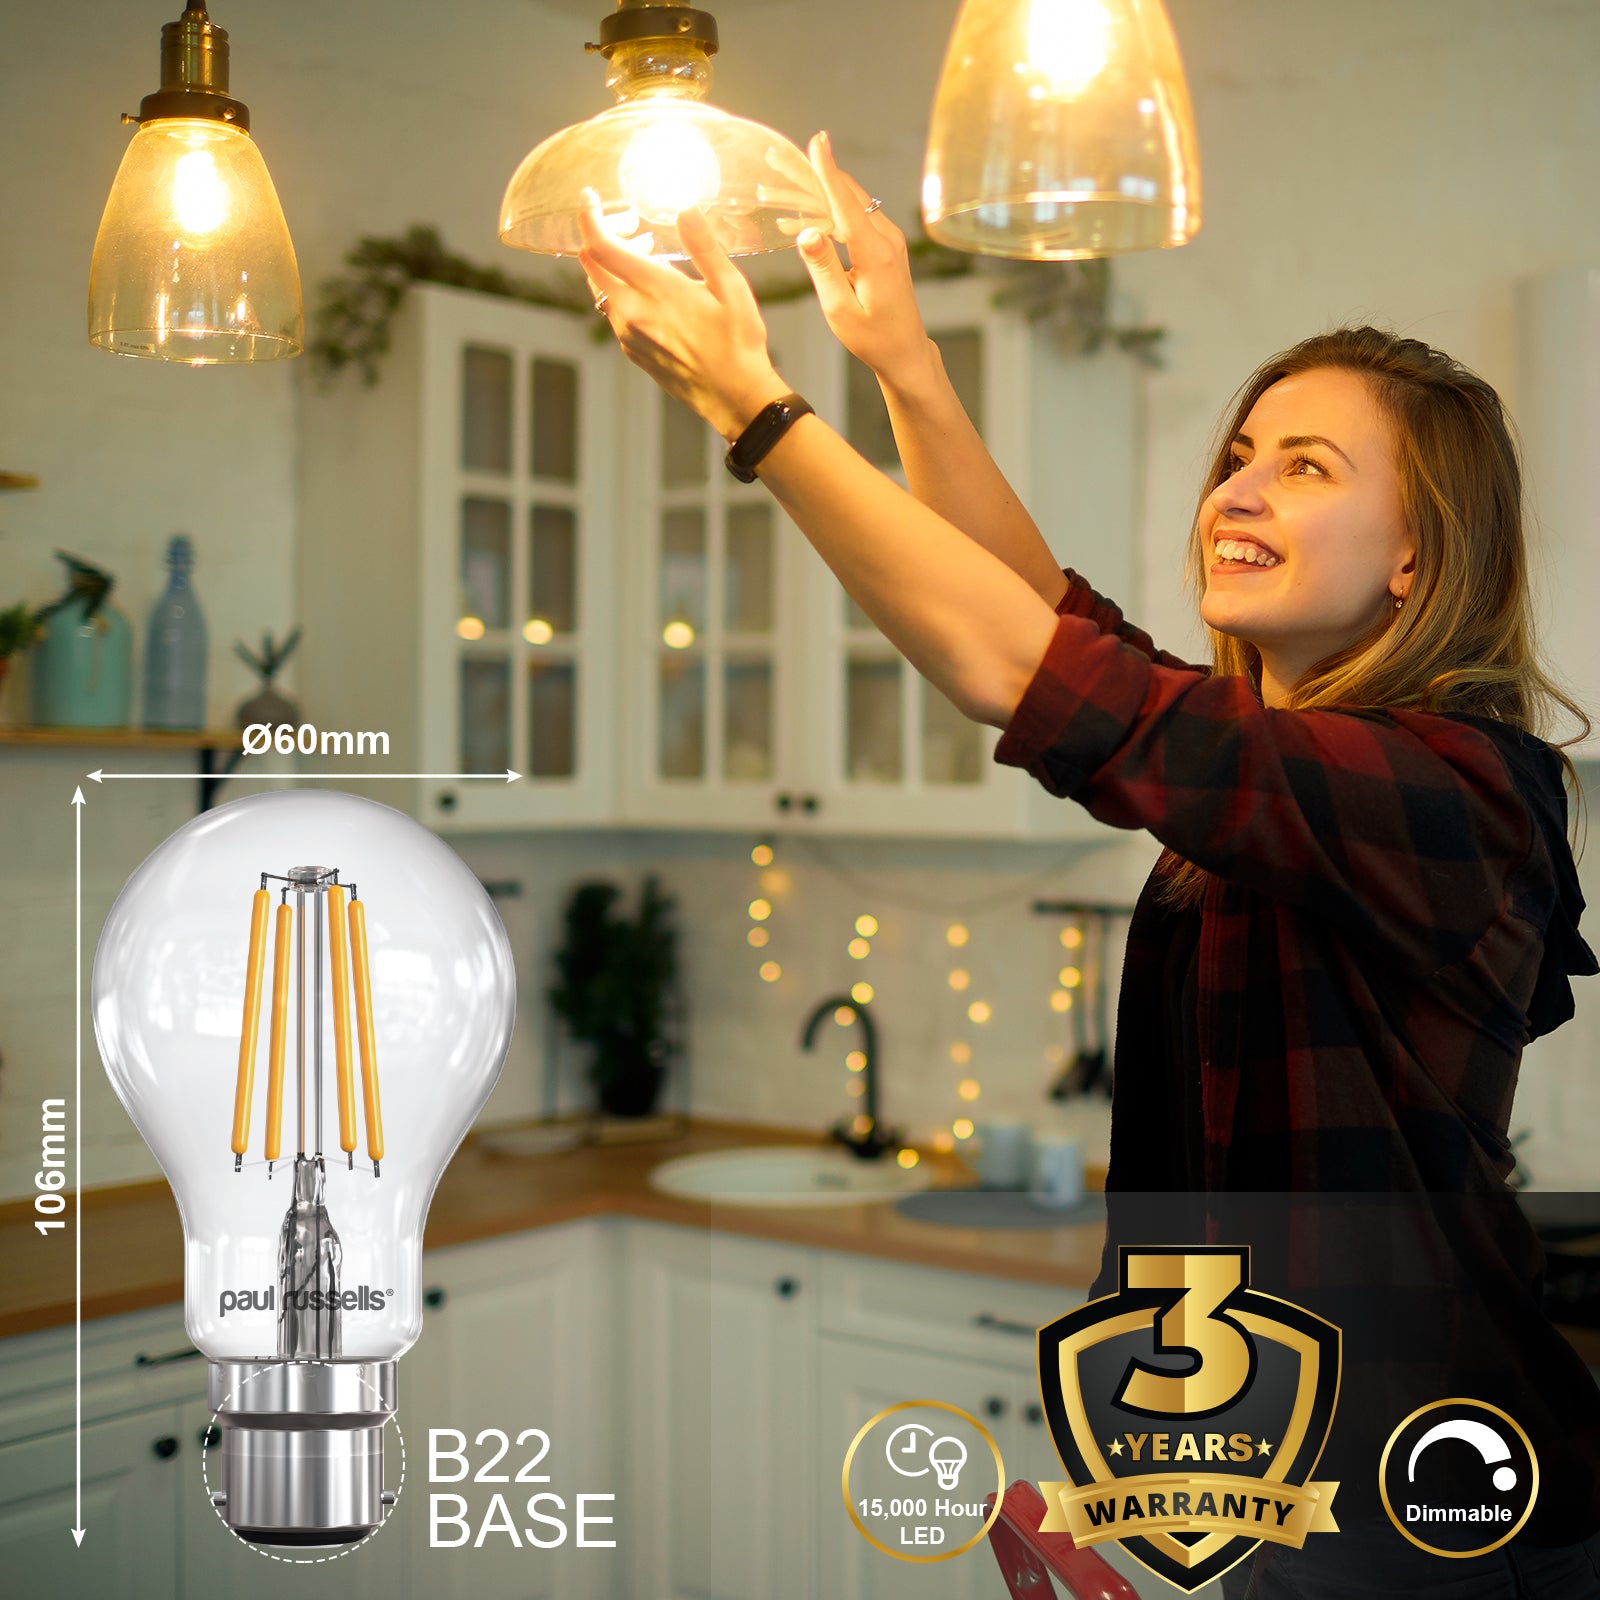 LED Dimmable Filament GLS 7W (60w), BC/B22, 806 Lumens, Warm White(2700K), 240V